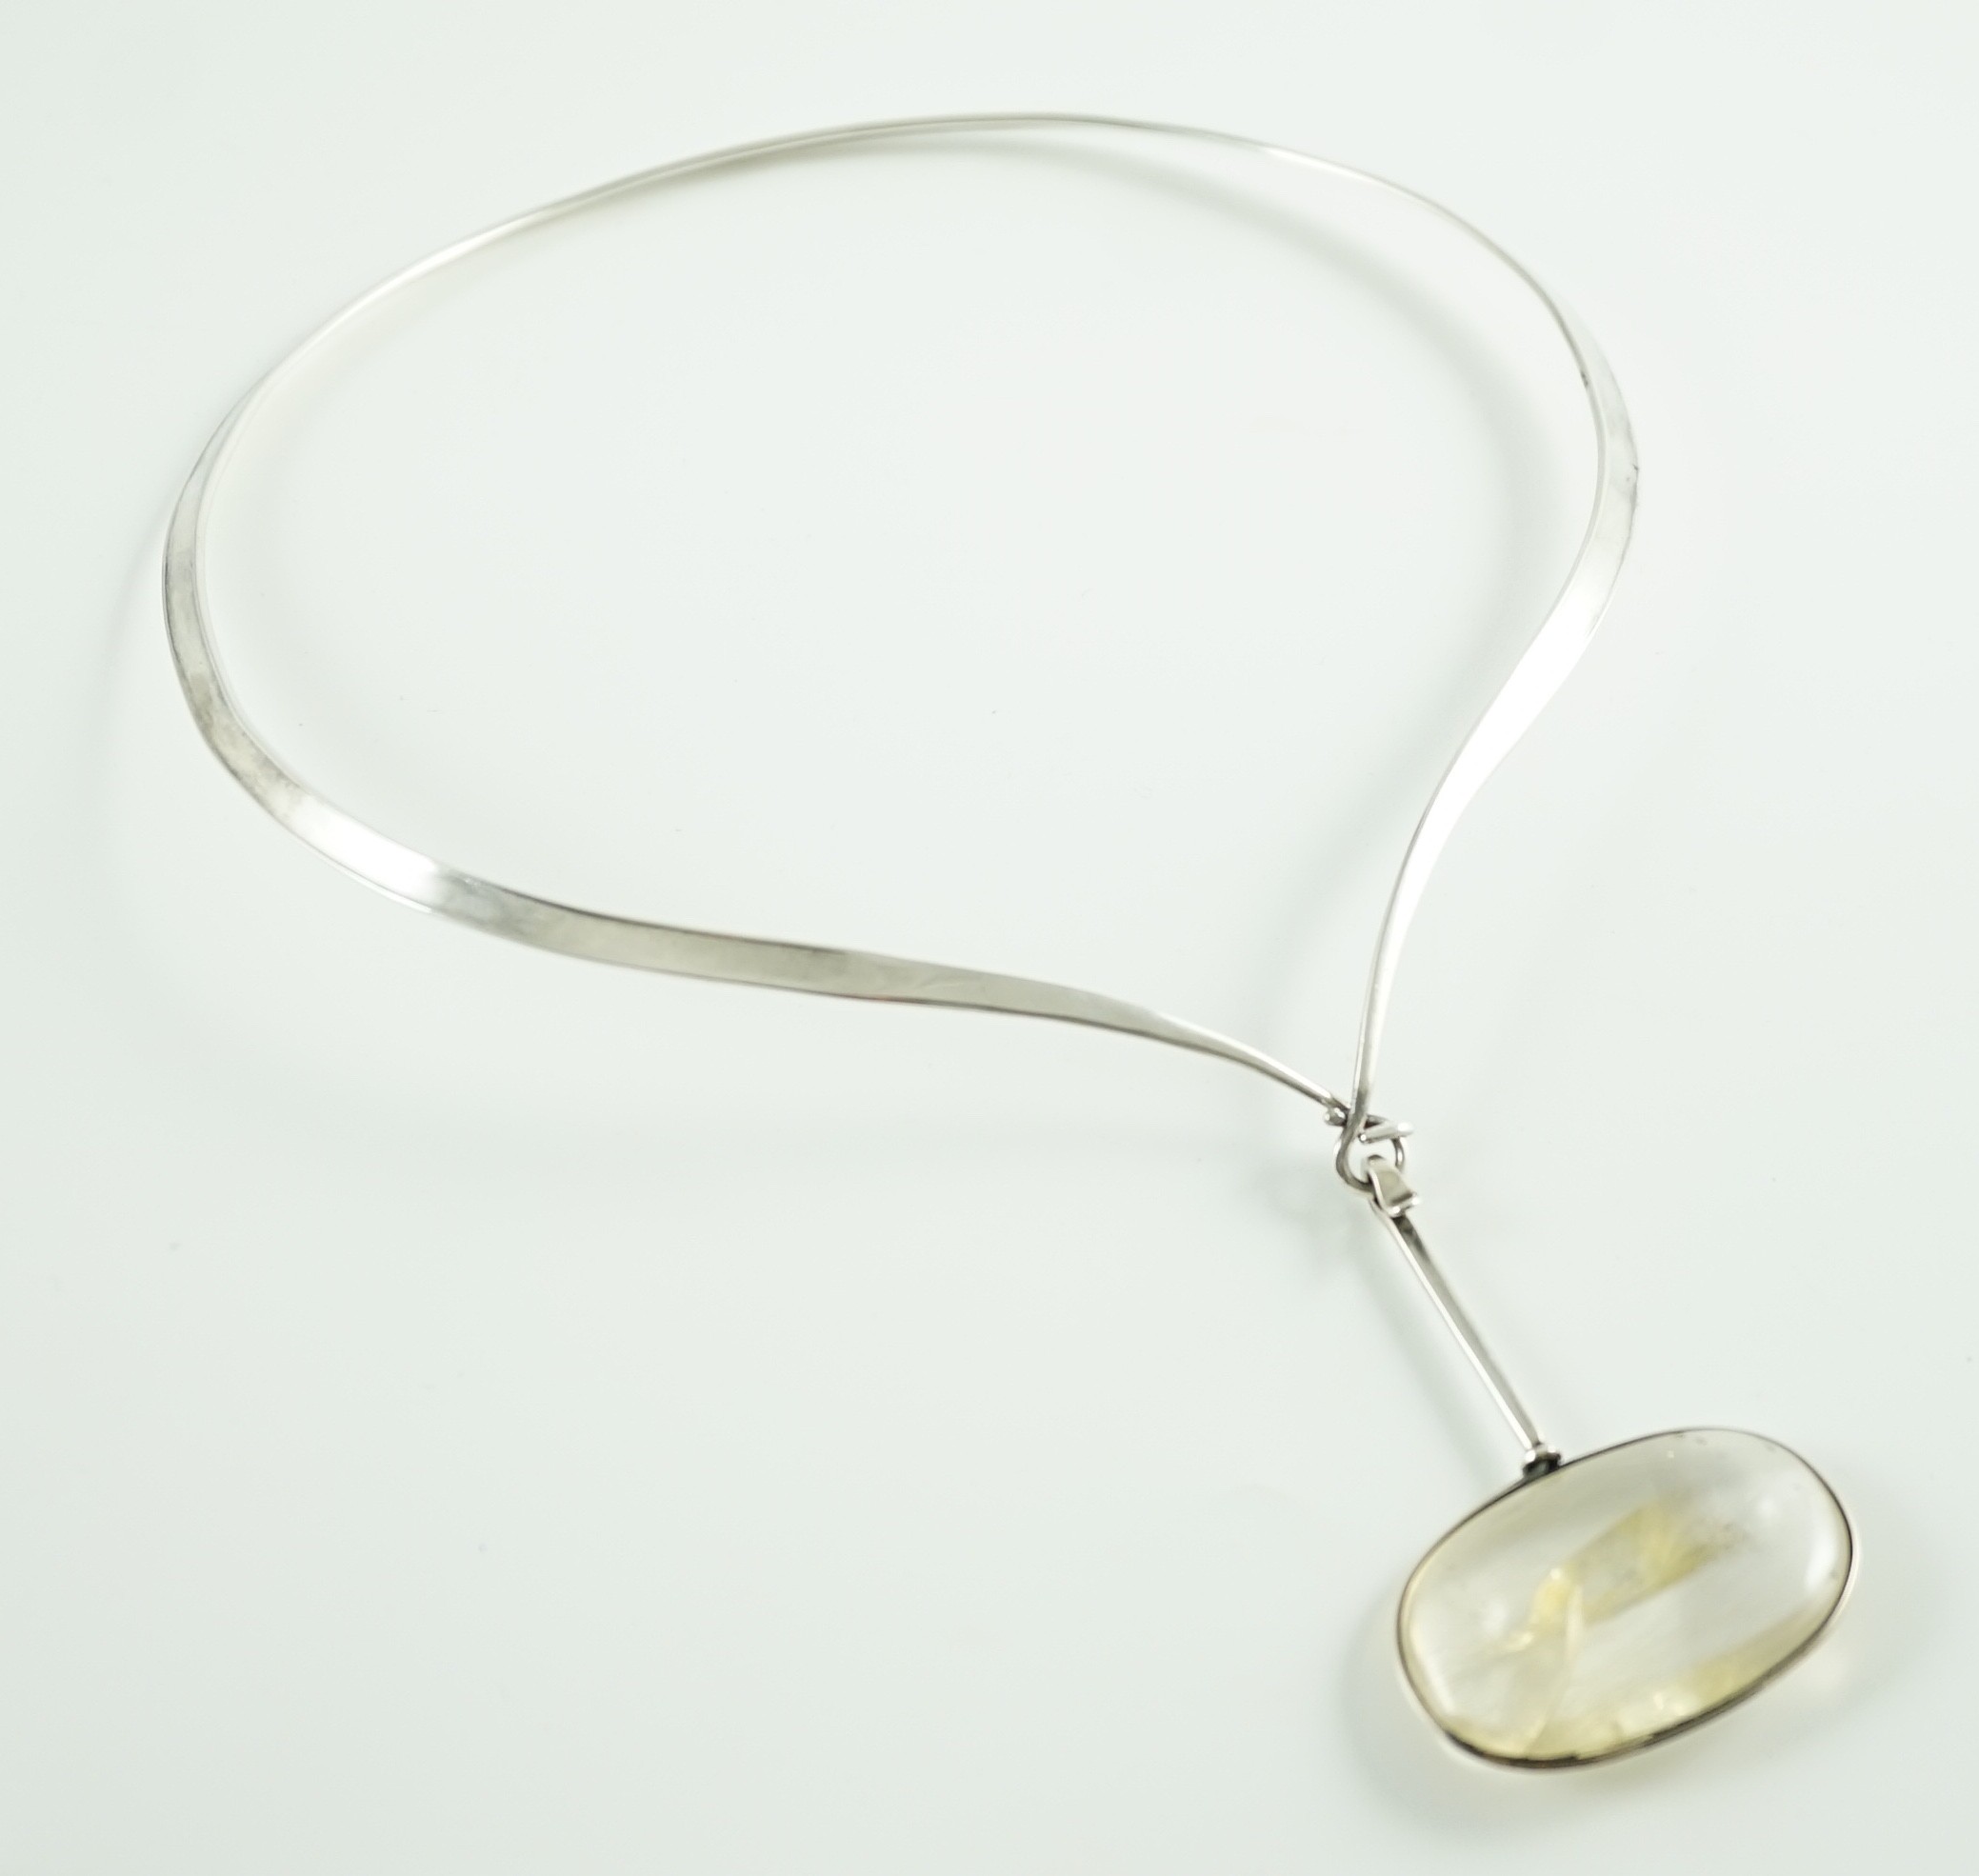 A Vivienne Torun for Georg Jensen Danish sterling silver and rutilated oval quartz set pendant necklace